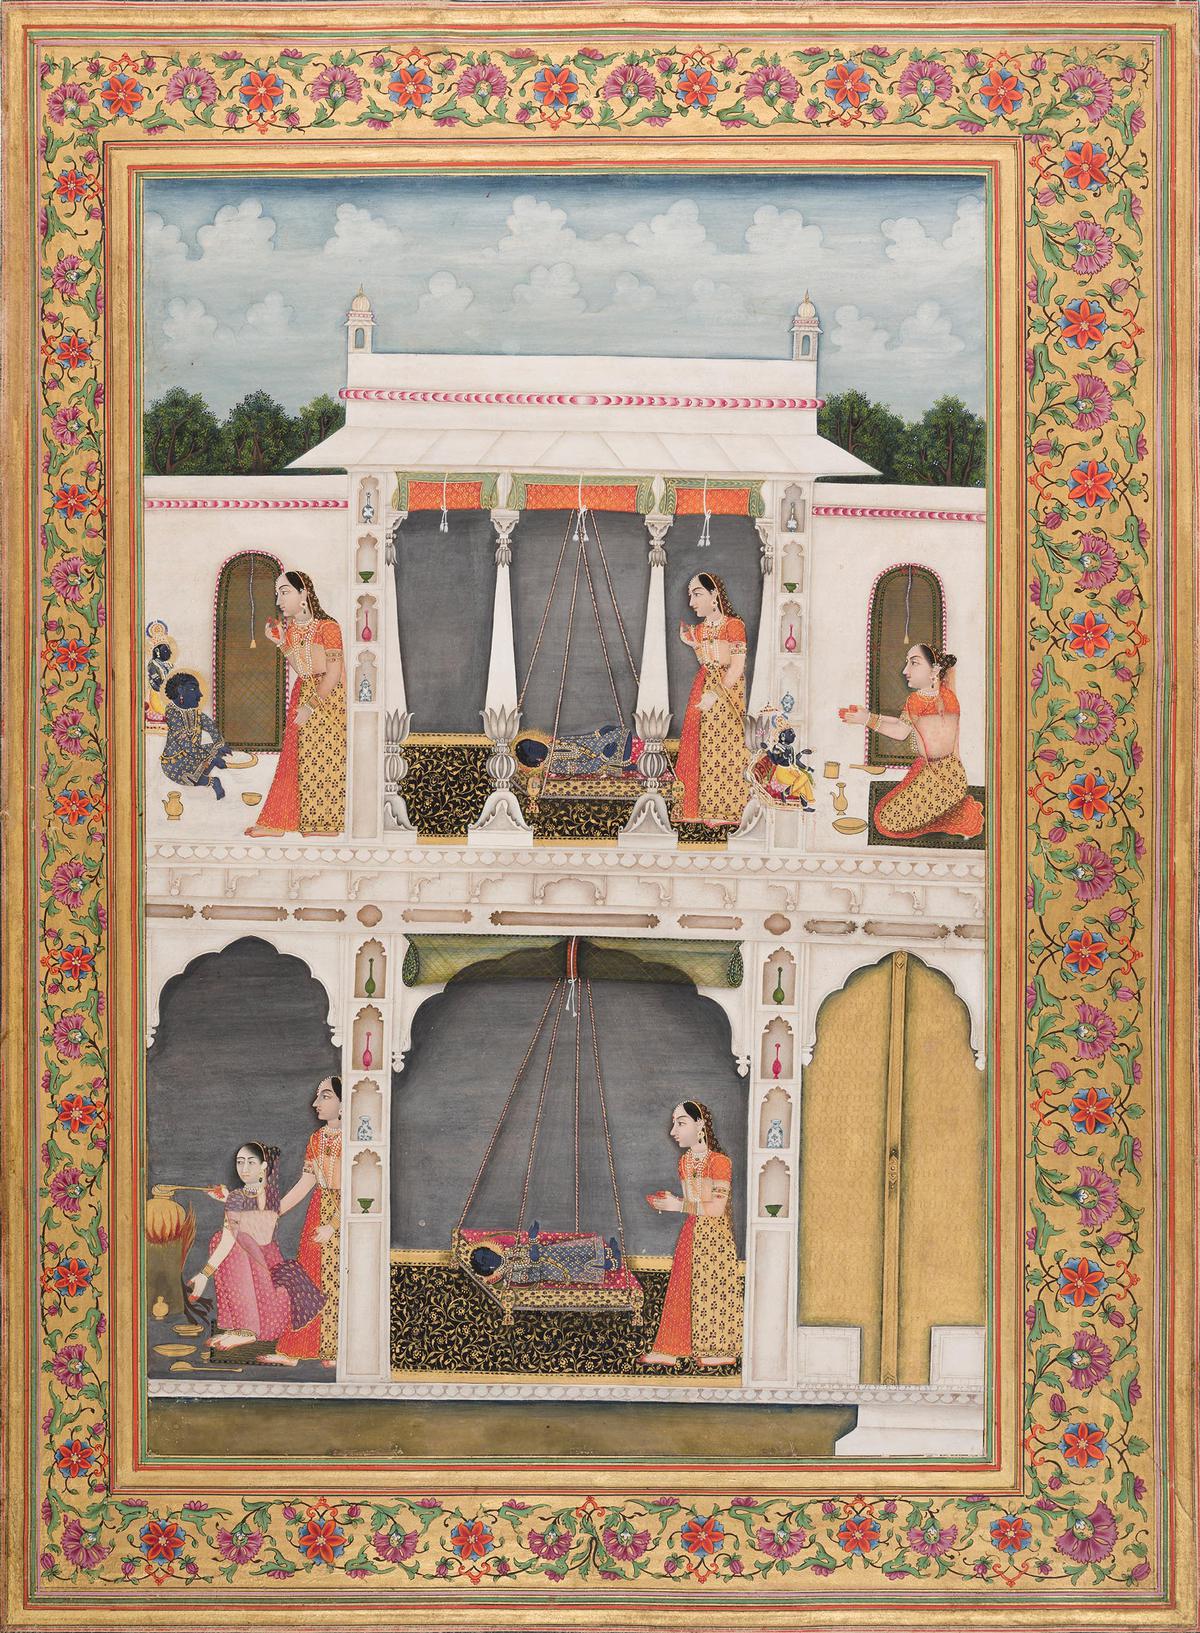 The Infant Rama Astounds Kaushalya
1808 Style C, Workshop associated with Faizallah of Awadh